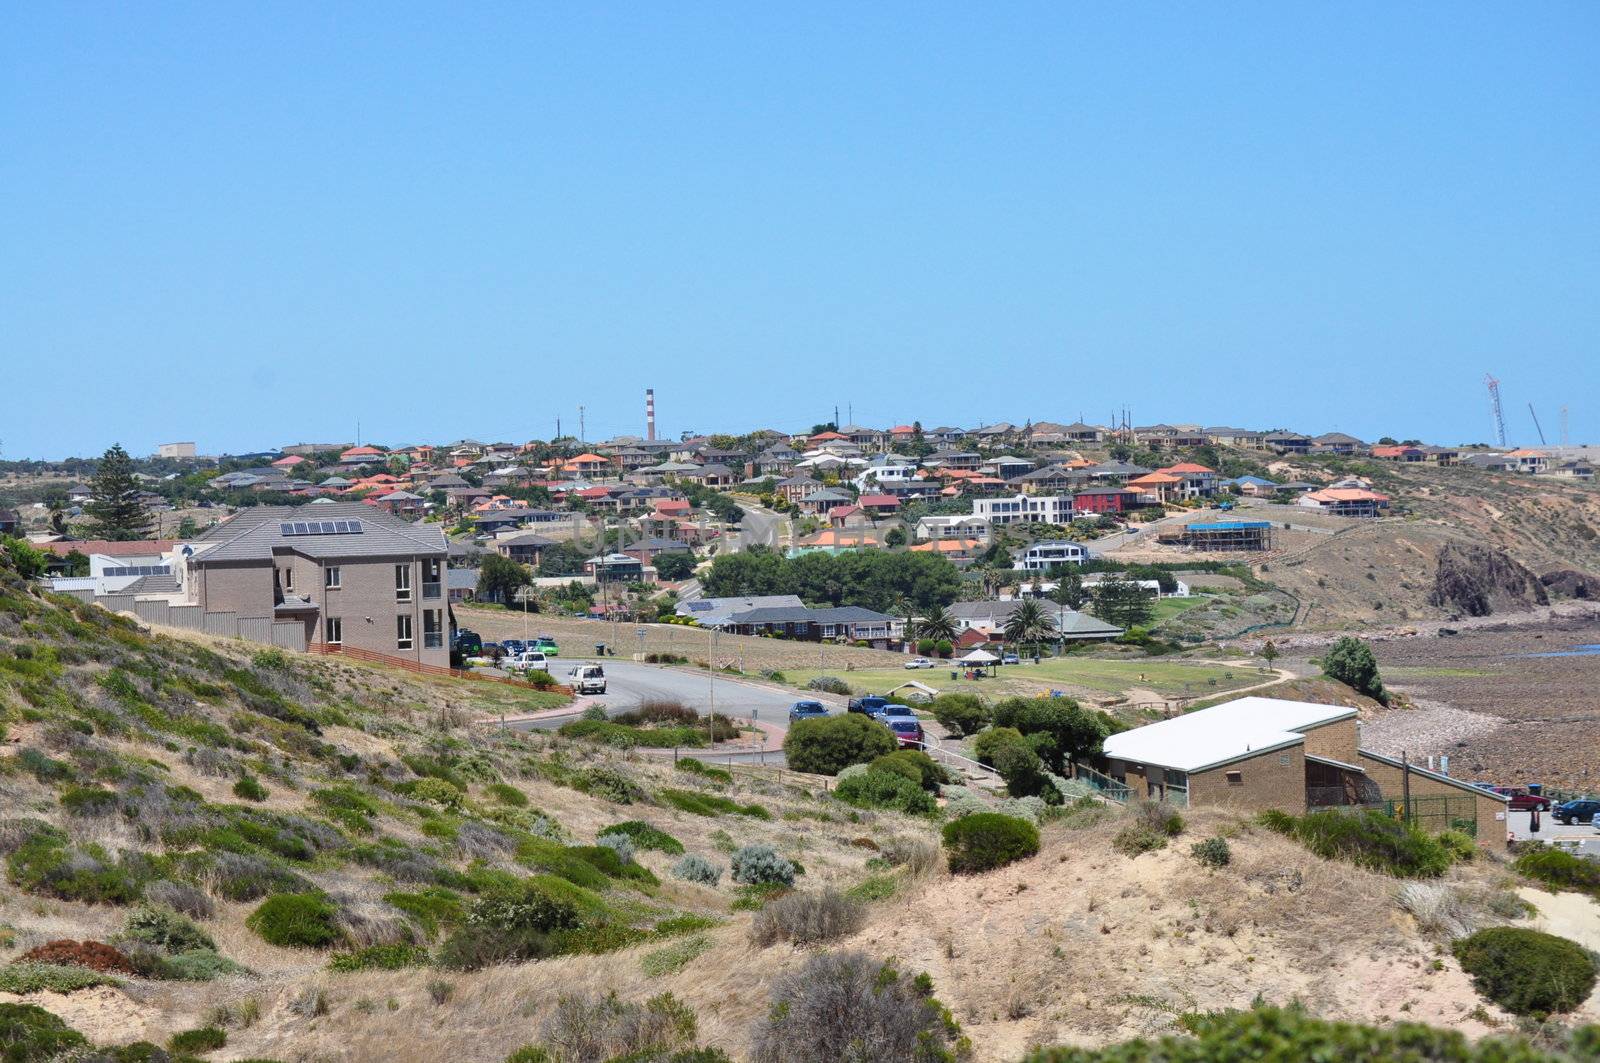 Many Australian Family Houses On The Hills by dimkadimon